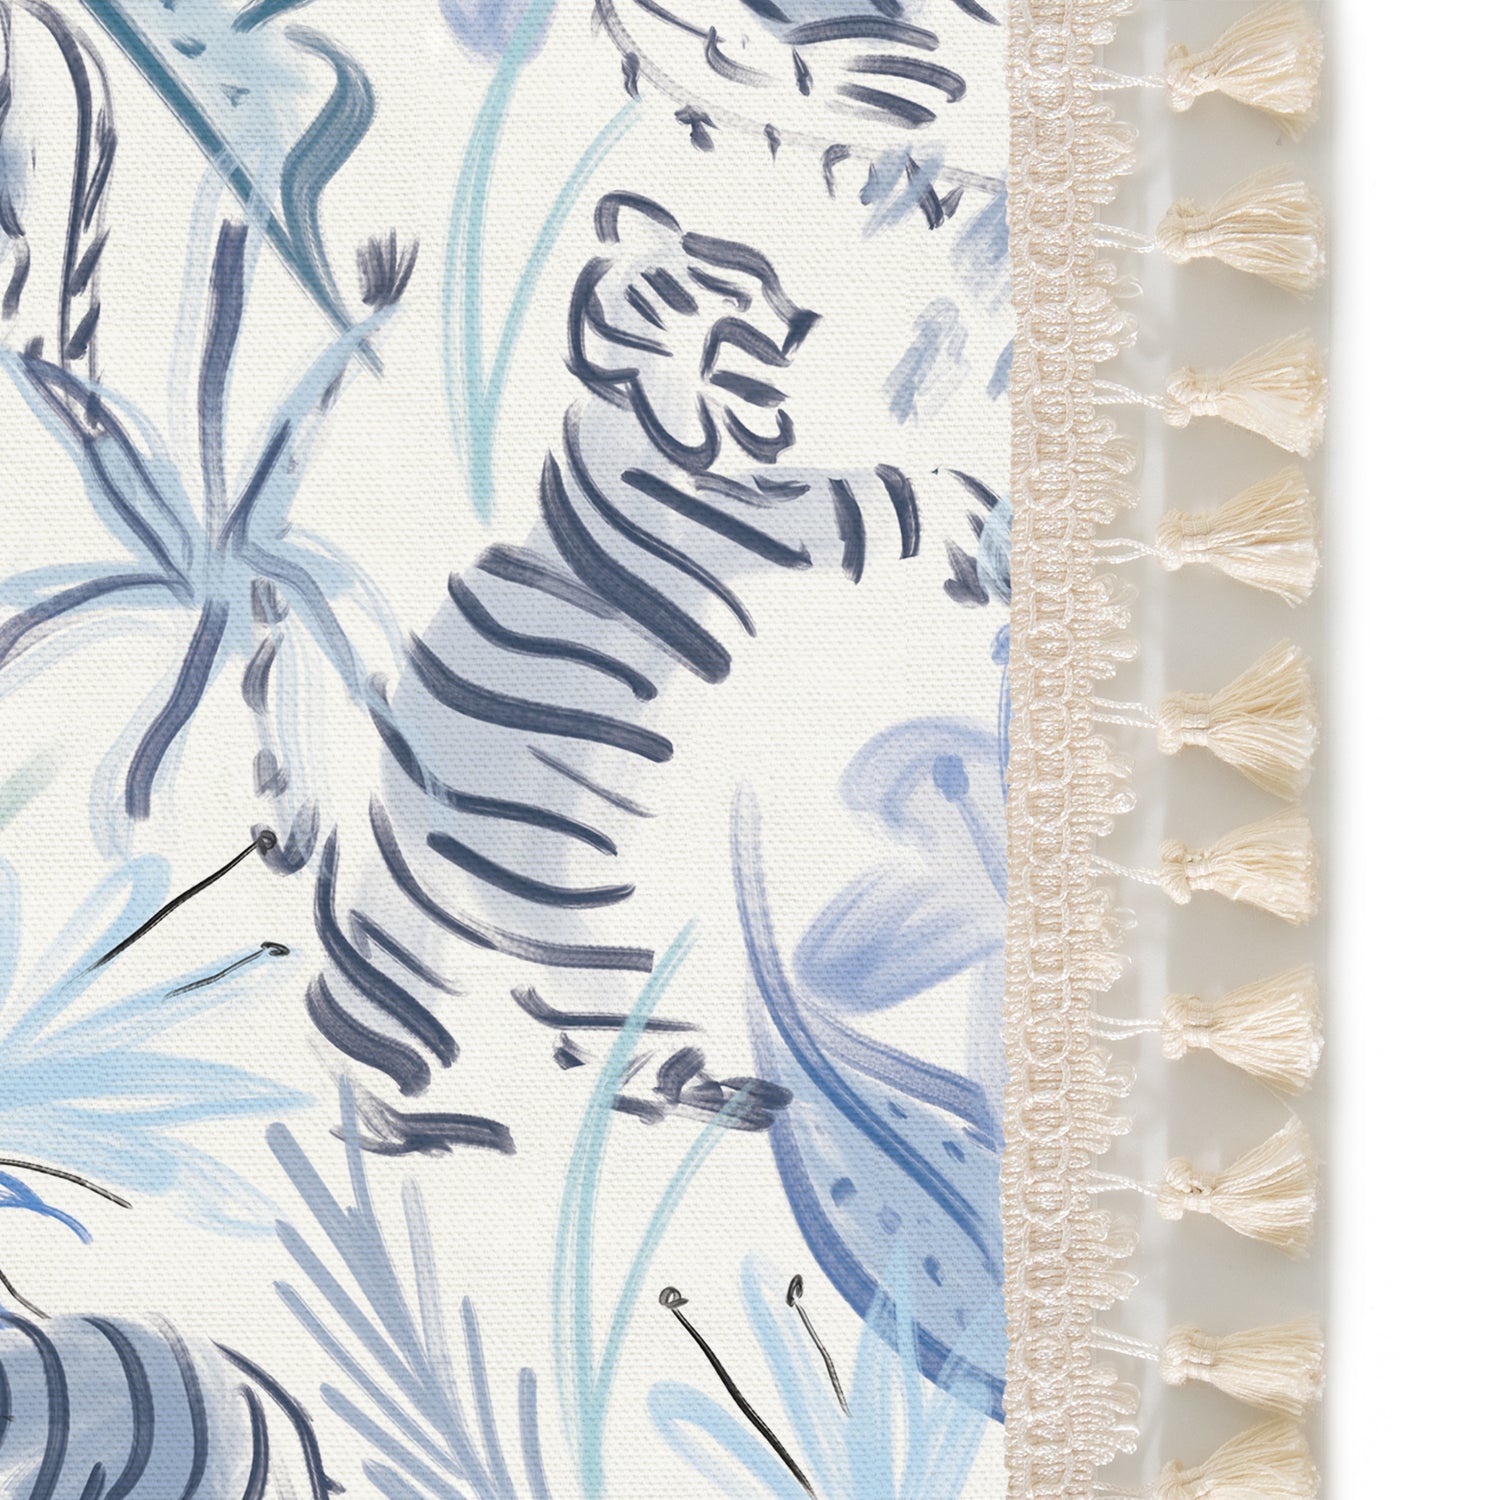 Upclose picture of Frida Blue custom Blue With Intricate Tiger Designcurtain with cream tassel trim